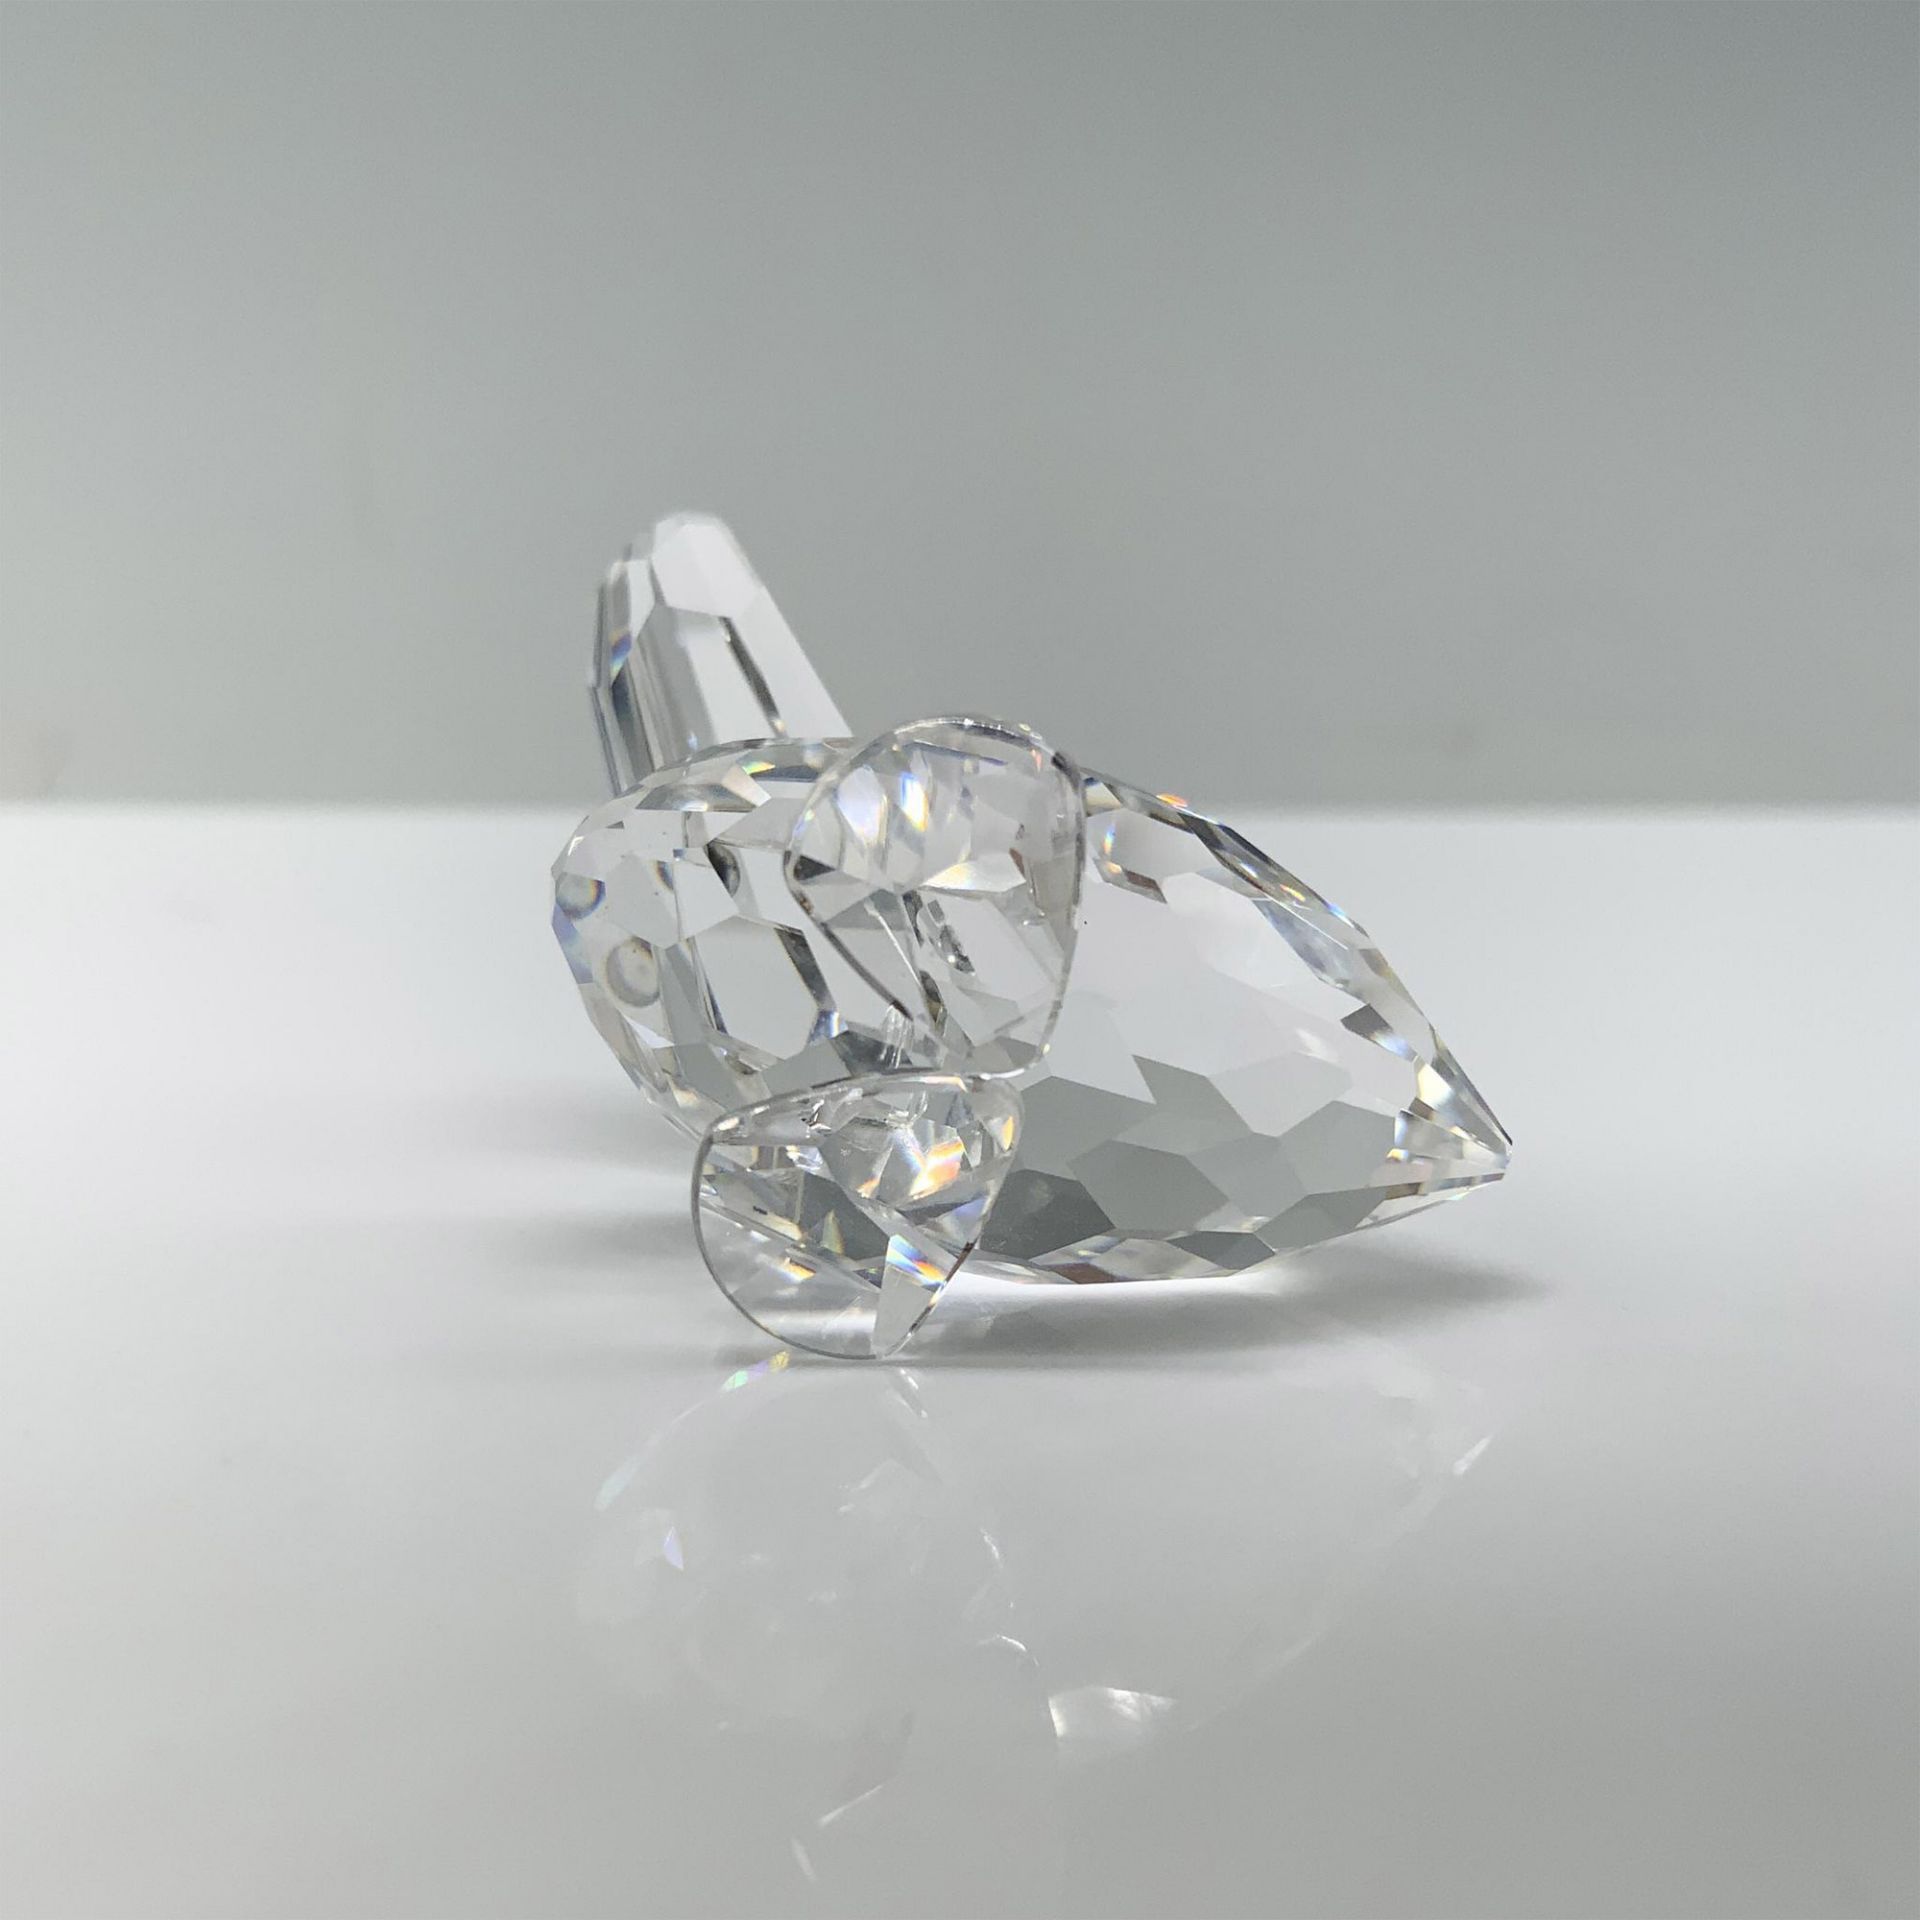 Swarovski Crystal Figurine, Pelican 171899 - Image 3 of 4